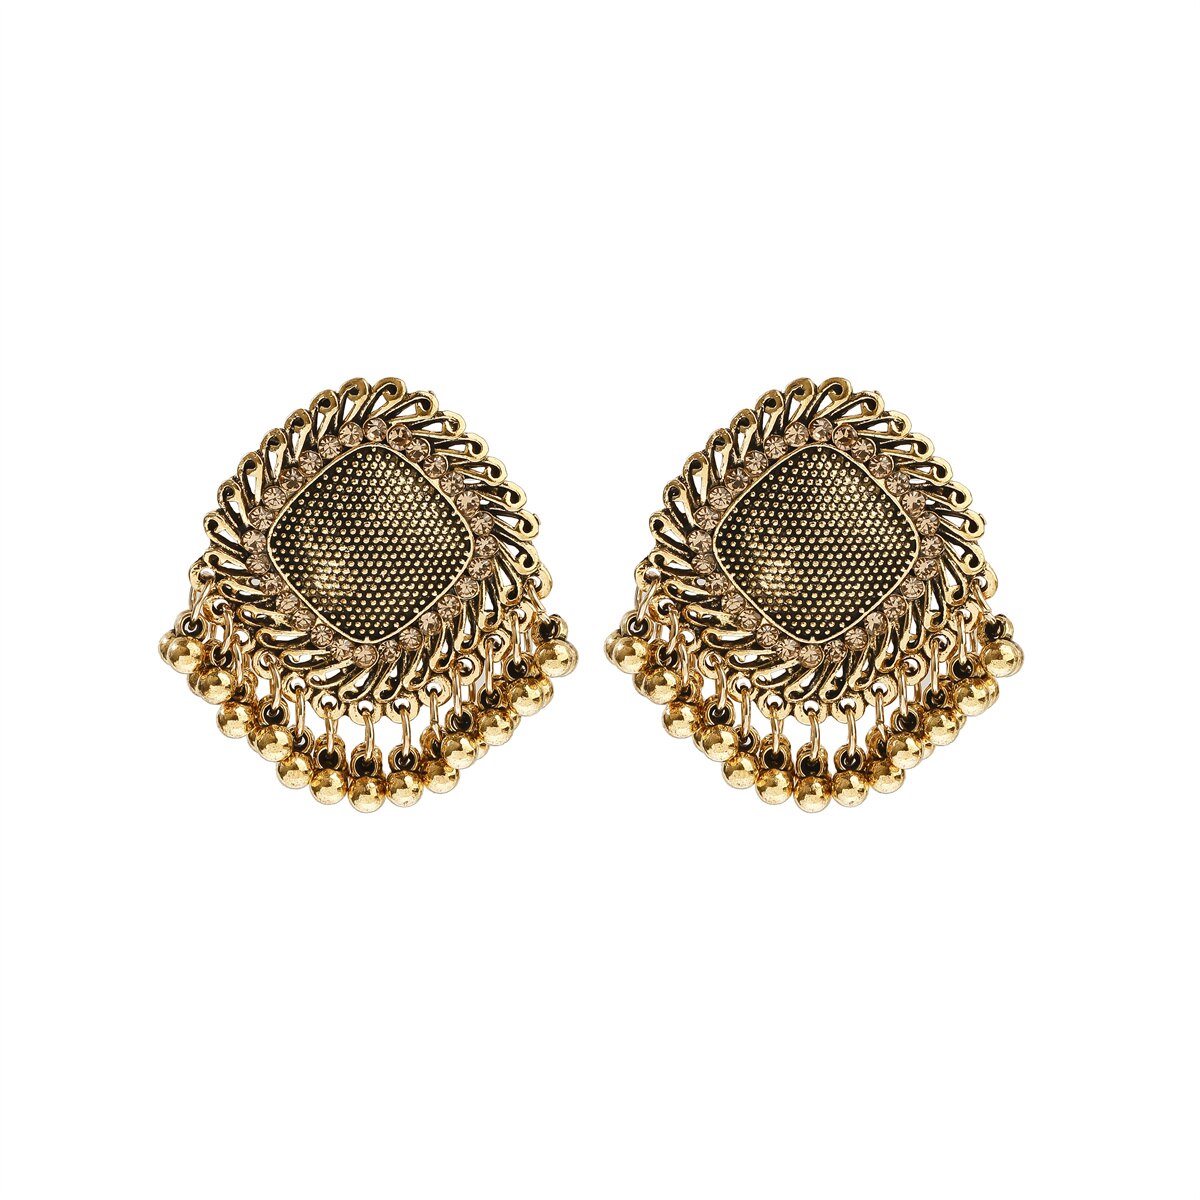 Classic-Ethnic-Gold-Color-Square-Flower-Drop-Earrings-For-Women-Pendient-Gyspy-Boho-Afghan-Tassel-La-1005003438047111-6